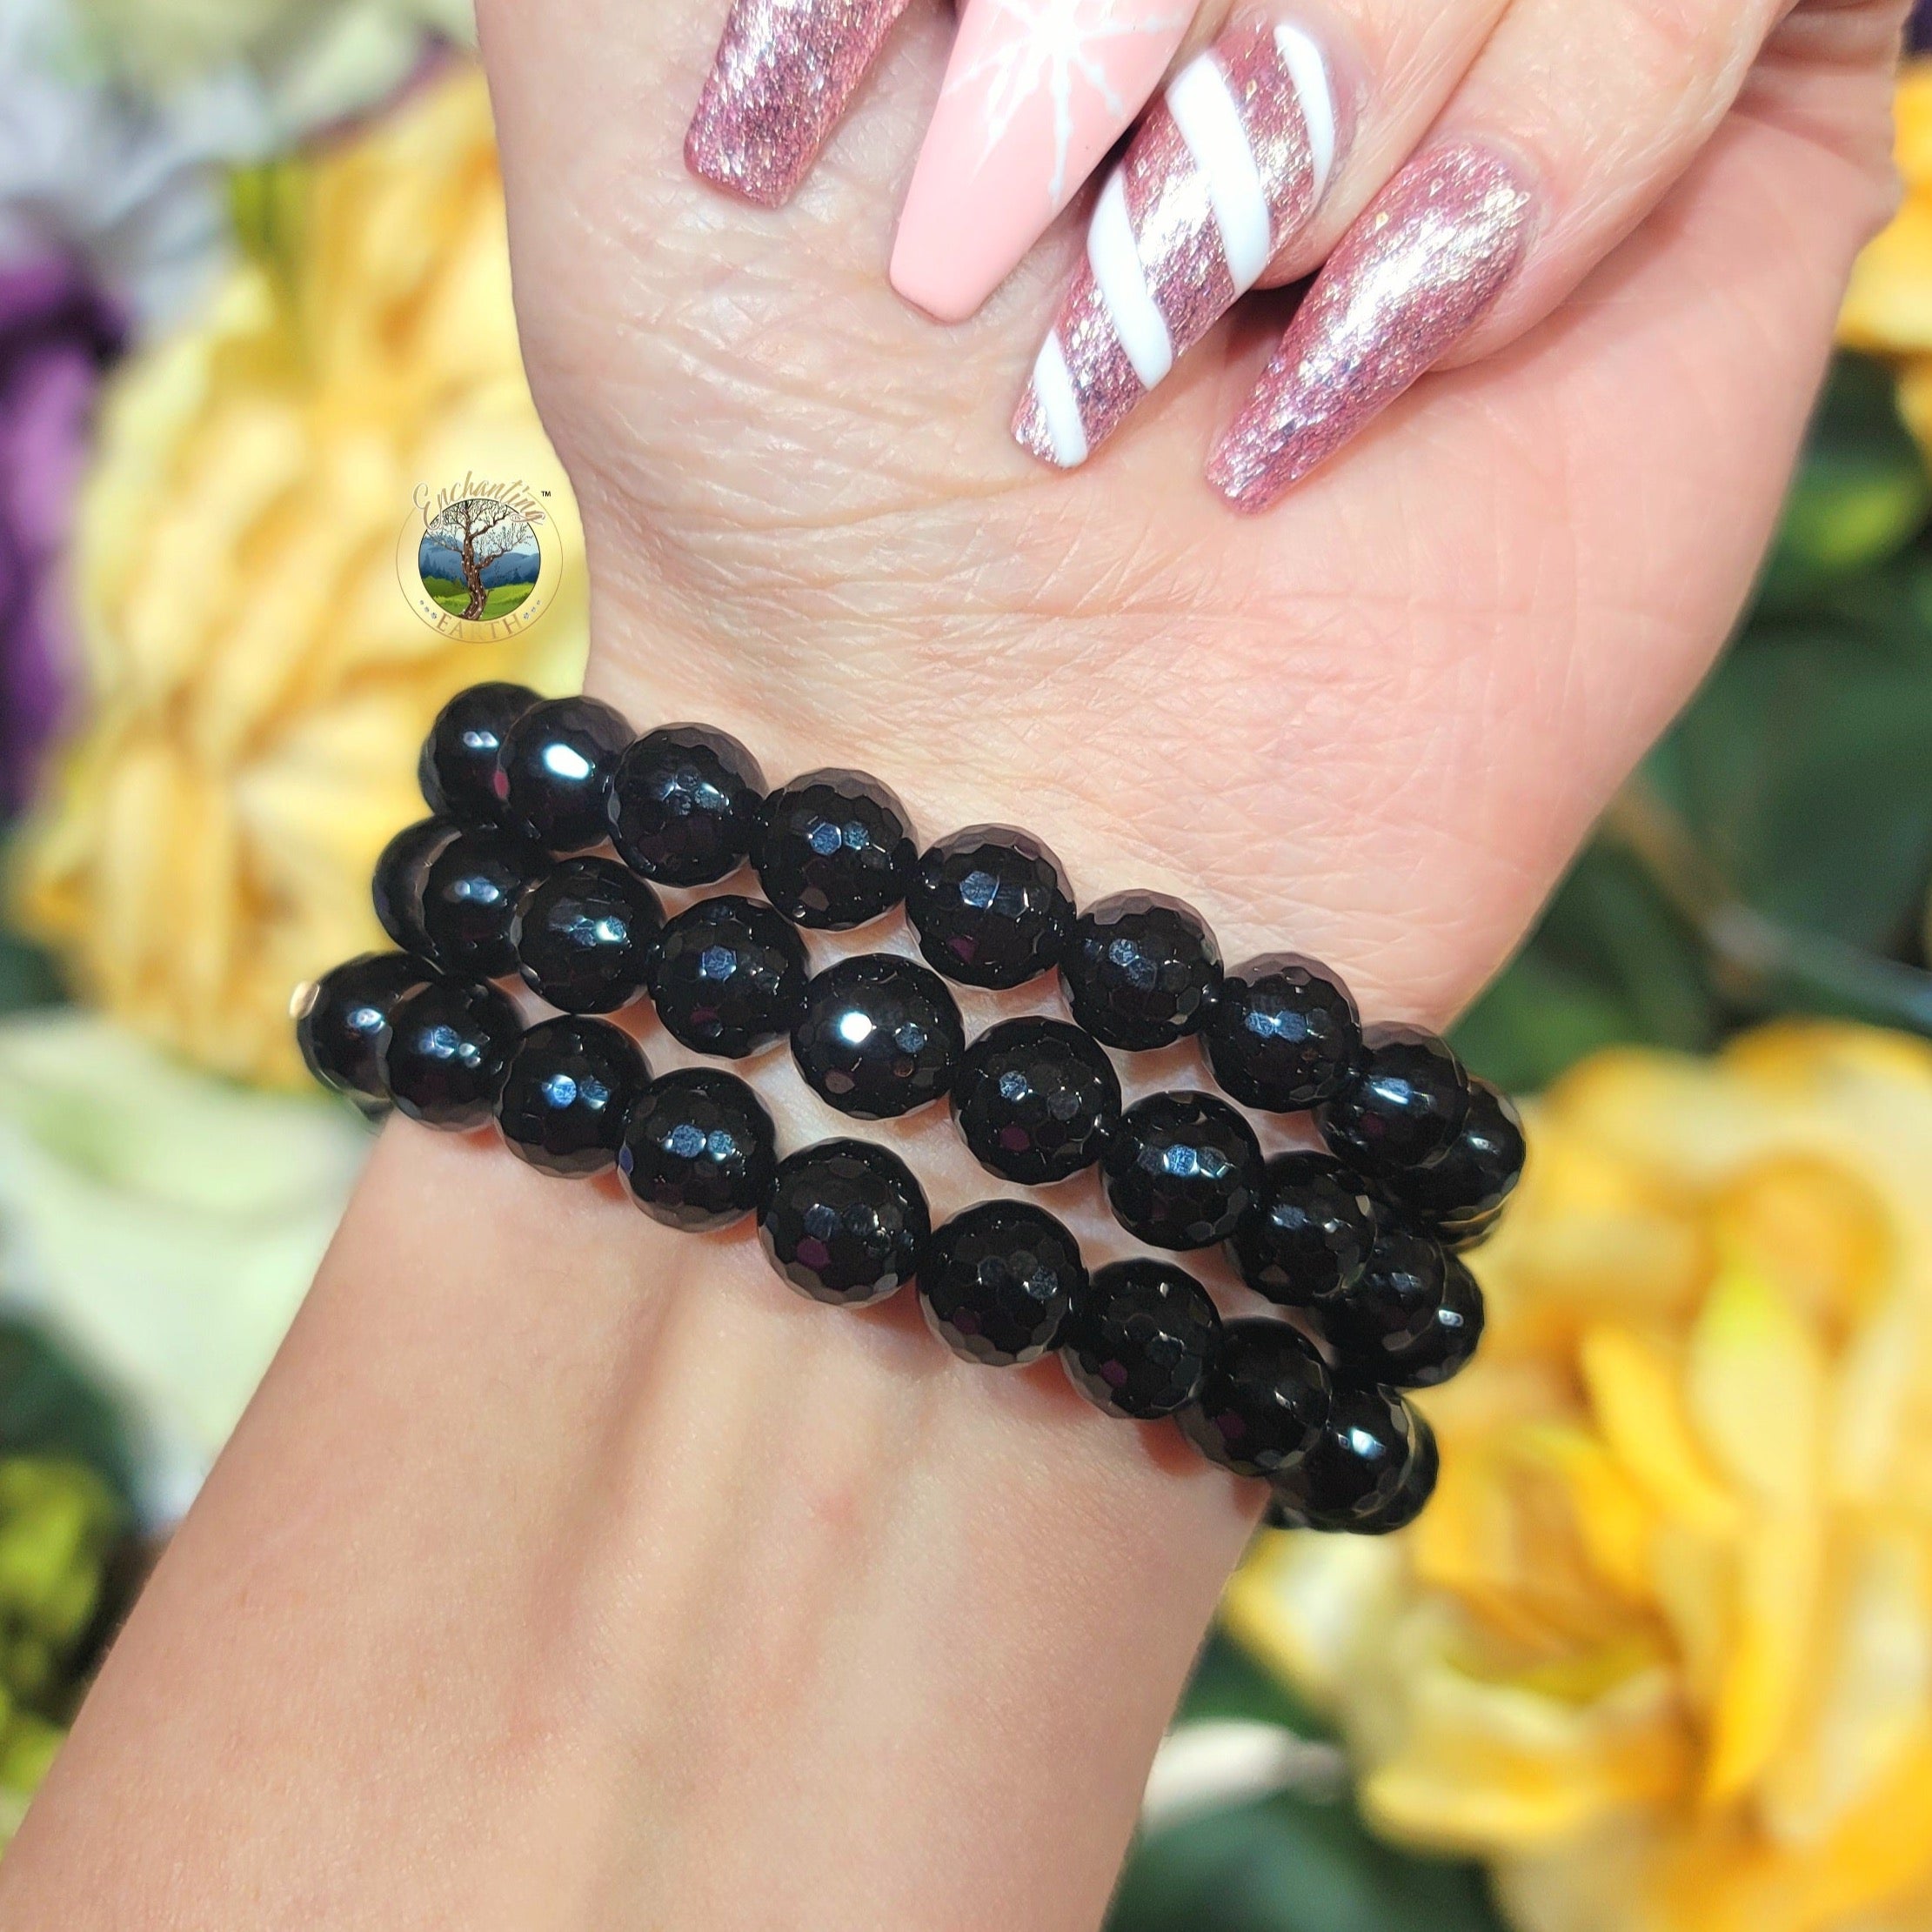 Black Onyx Faceted Bracelet for Amplification, Focus, Protection & Shield Against Negative Energy